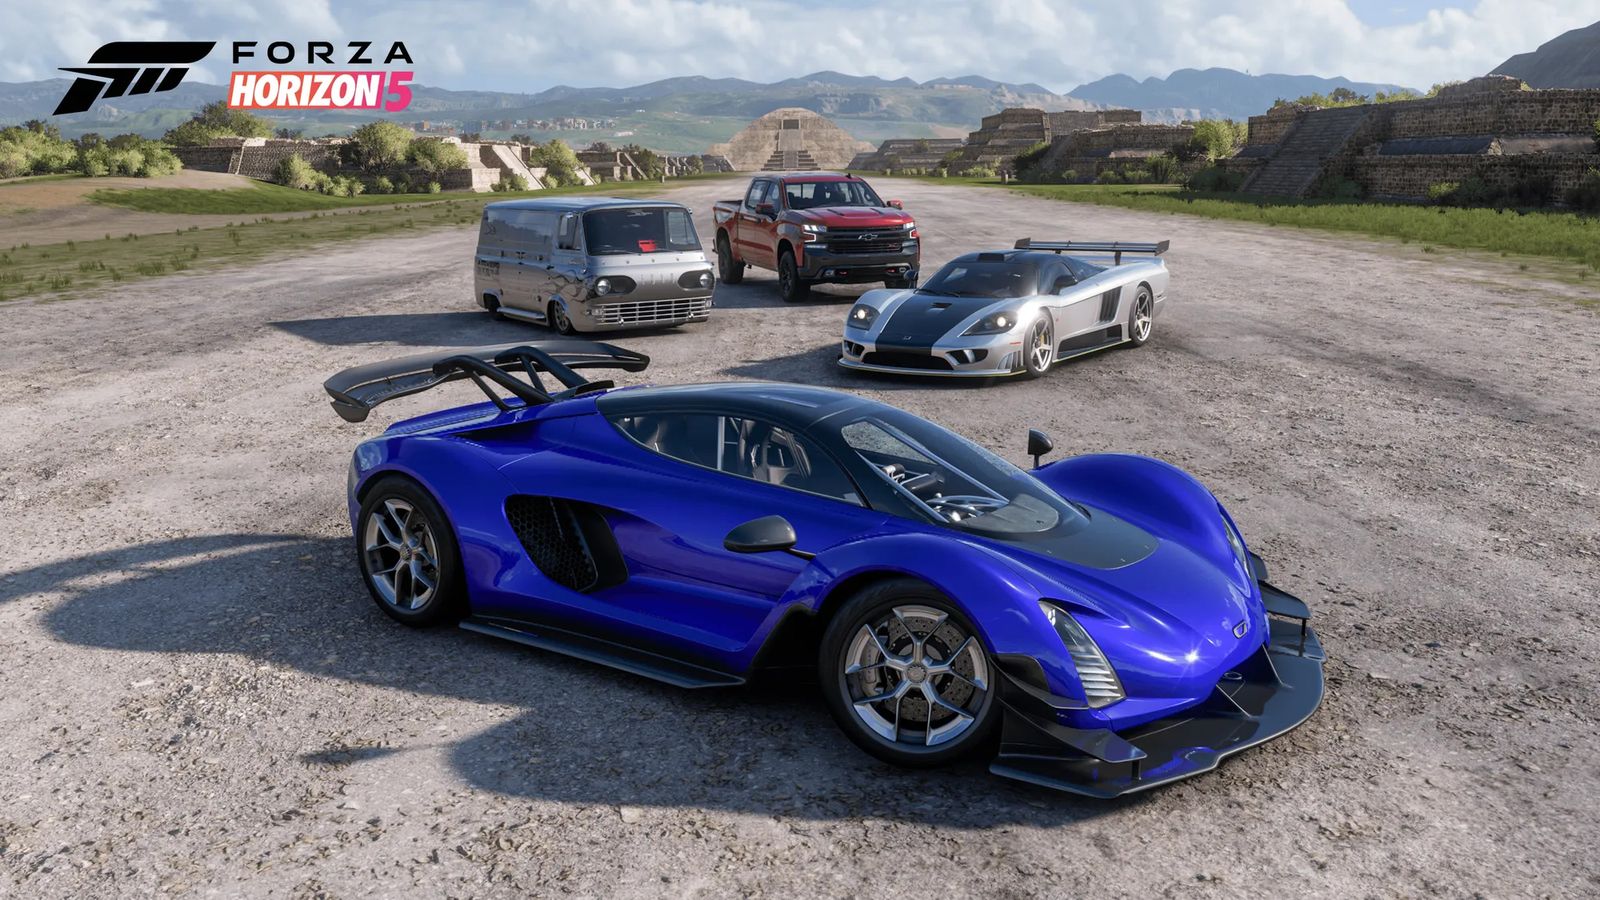 Forza Horizon 5 American Automotive Car Pack